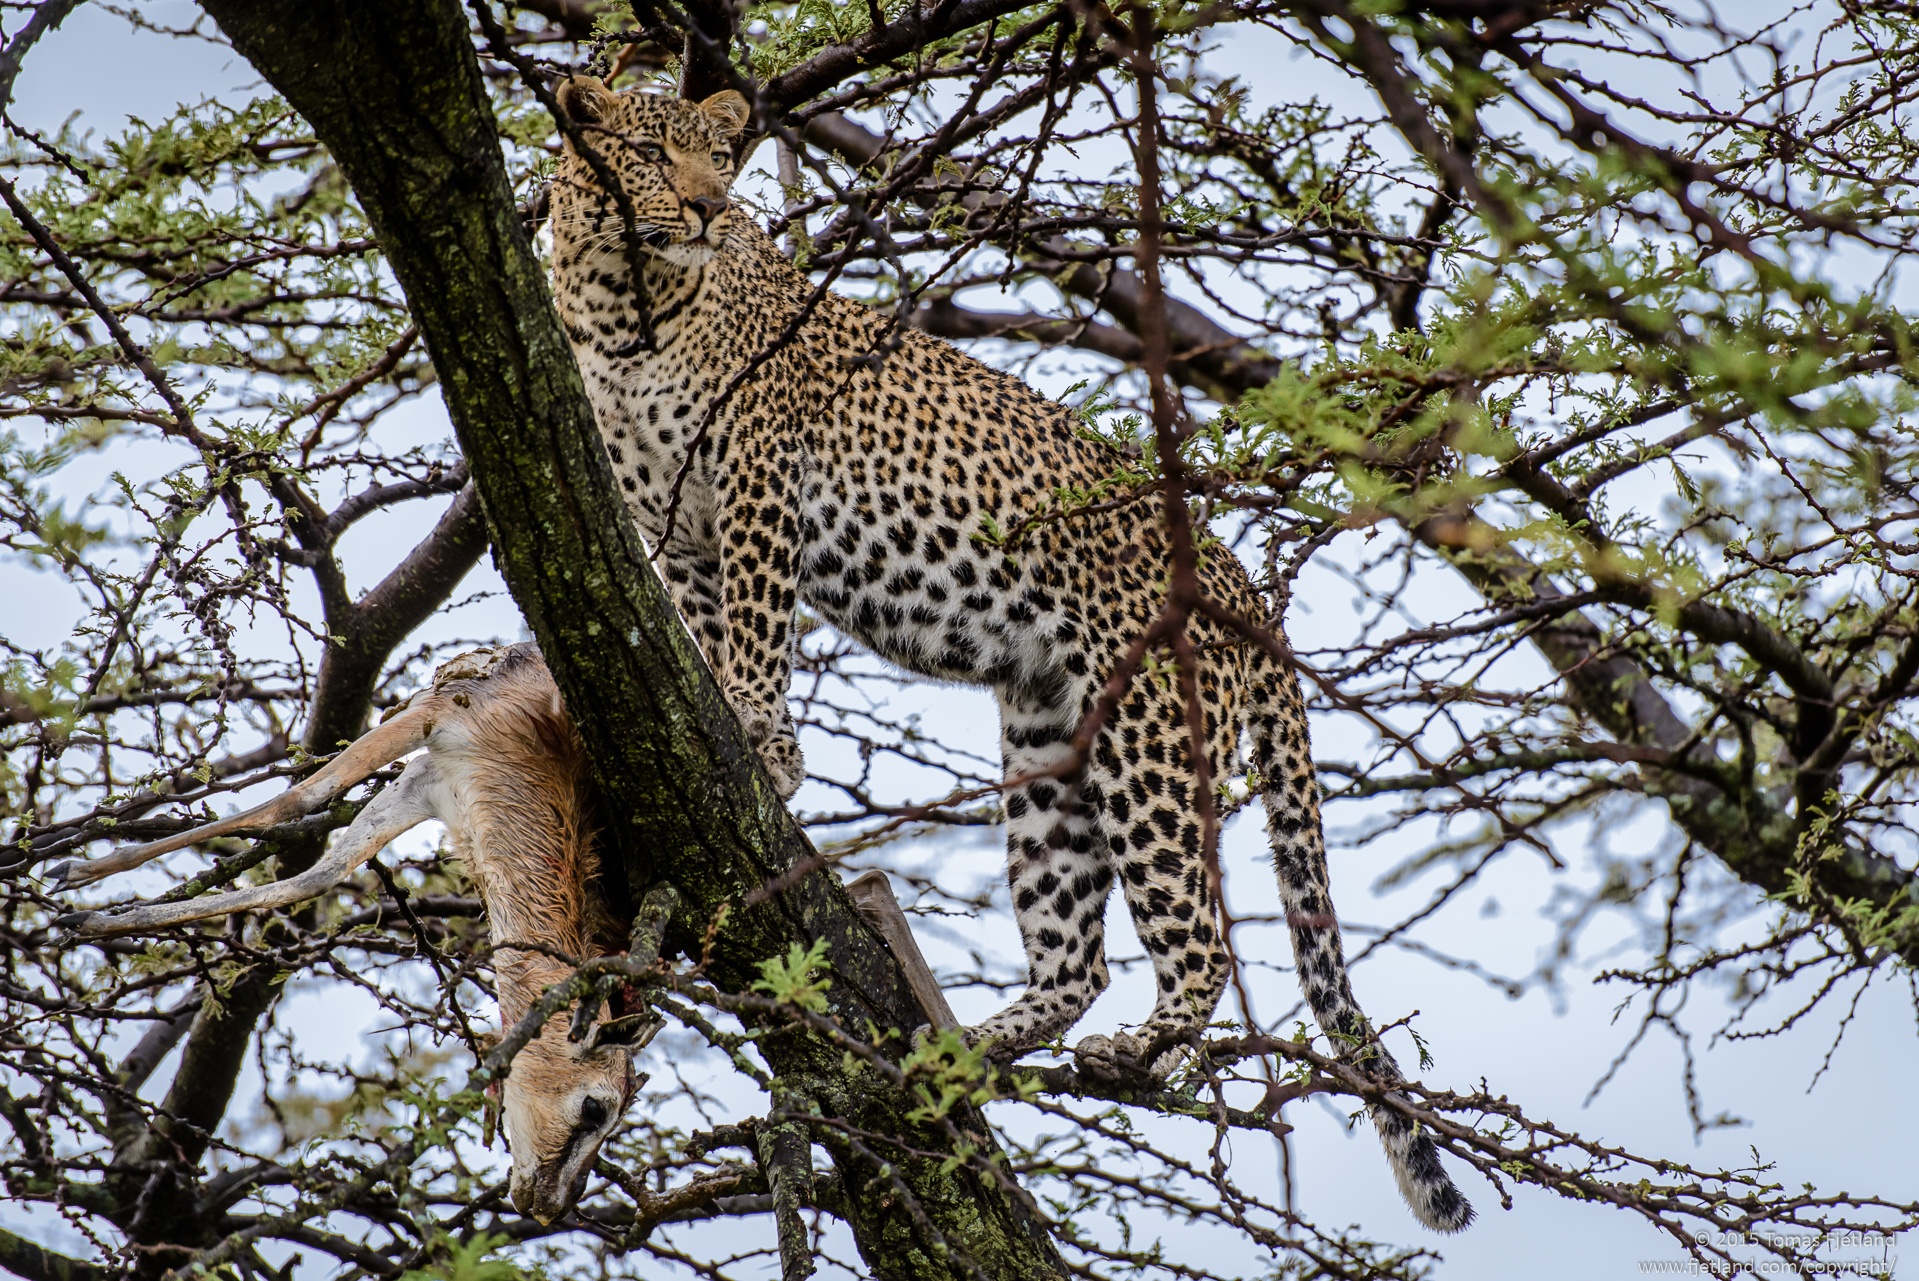 Leopard with Thomson's gazelle catch